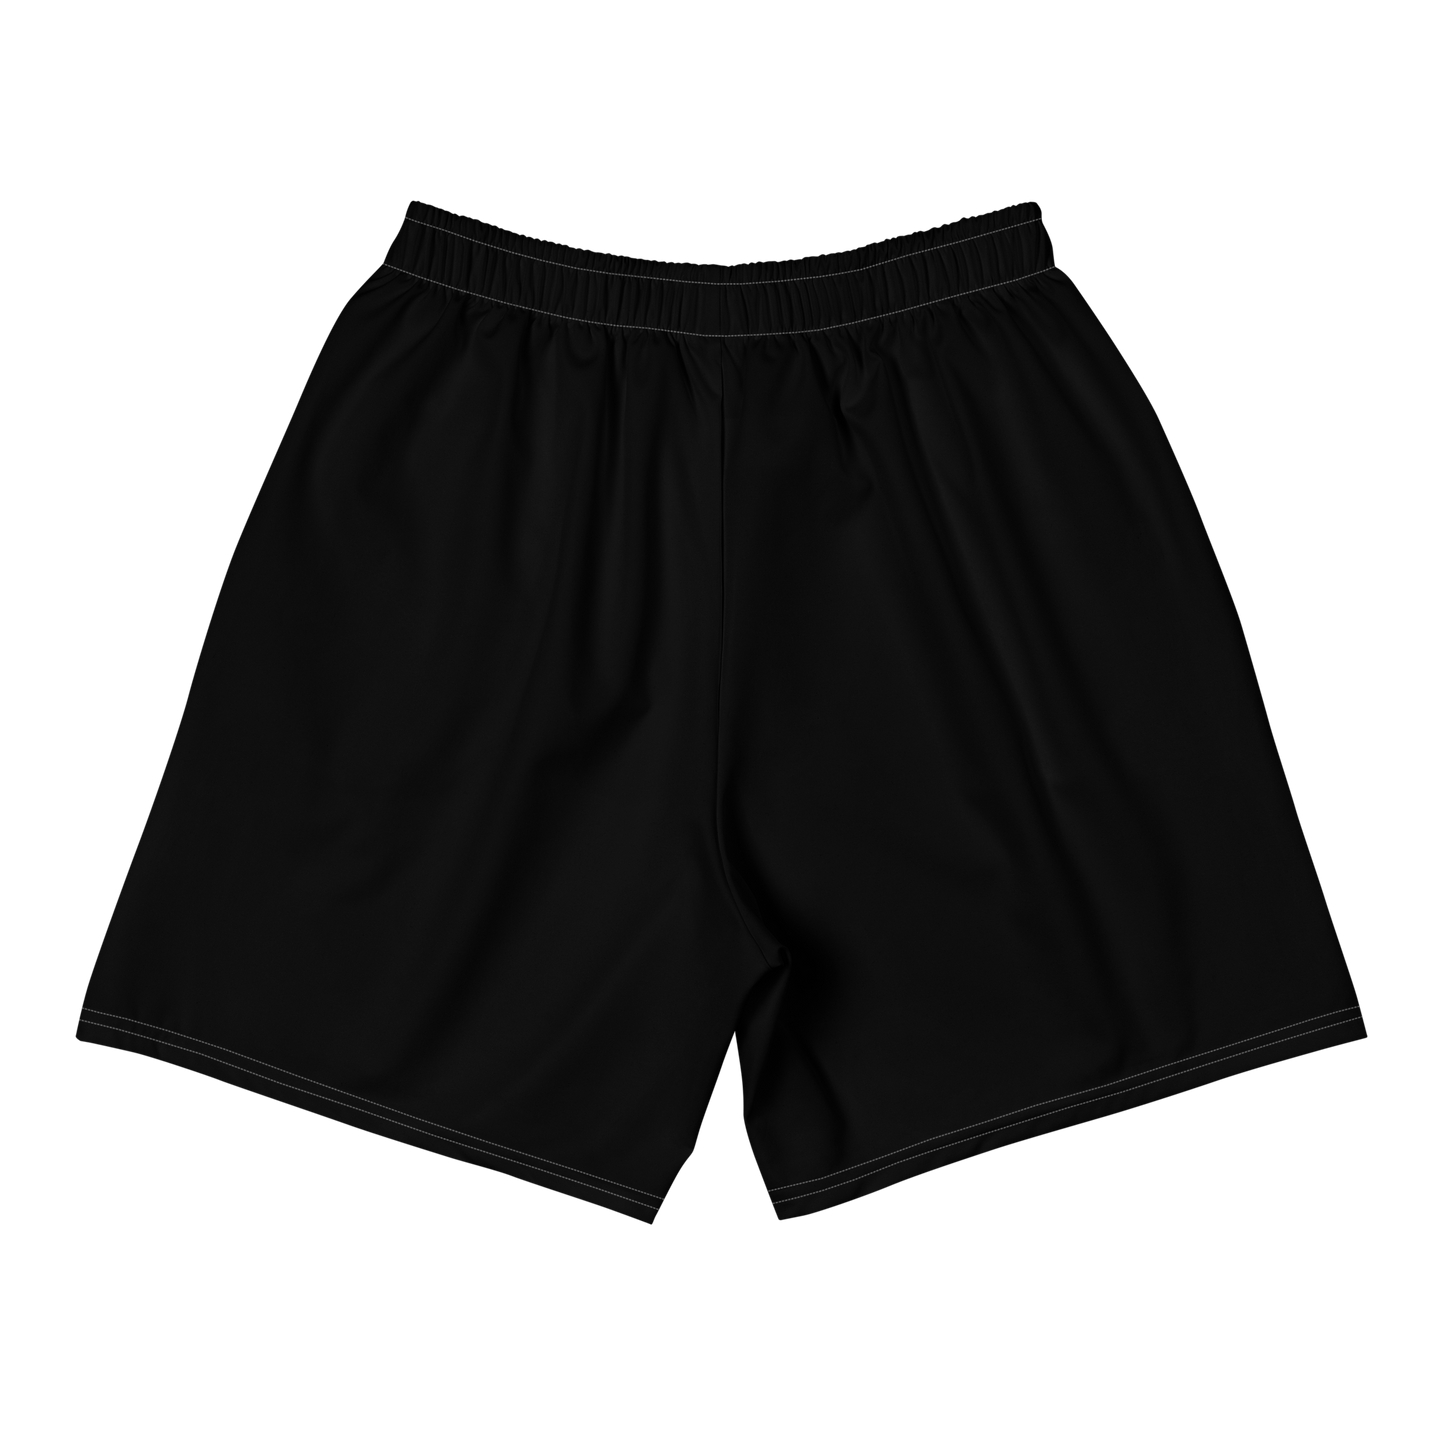 OE 'Black' Shorts